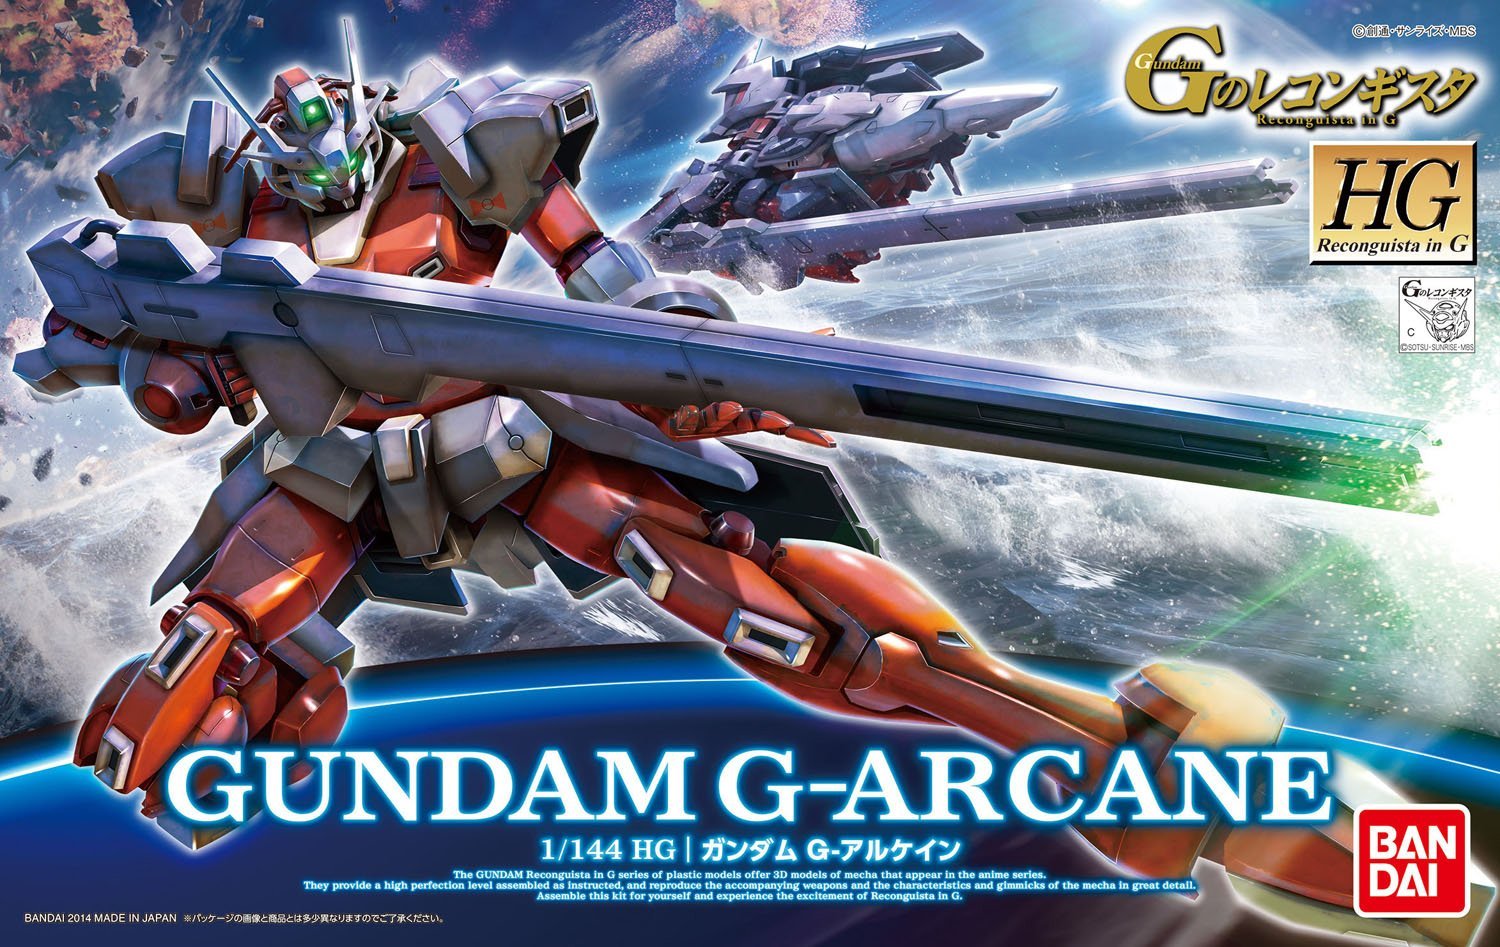 Gundam 1/144 HG Reconguista G #04 G-Arcane Model Kit